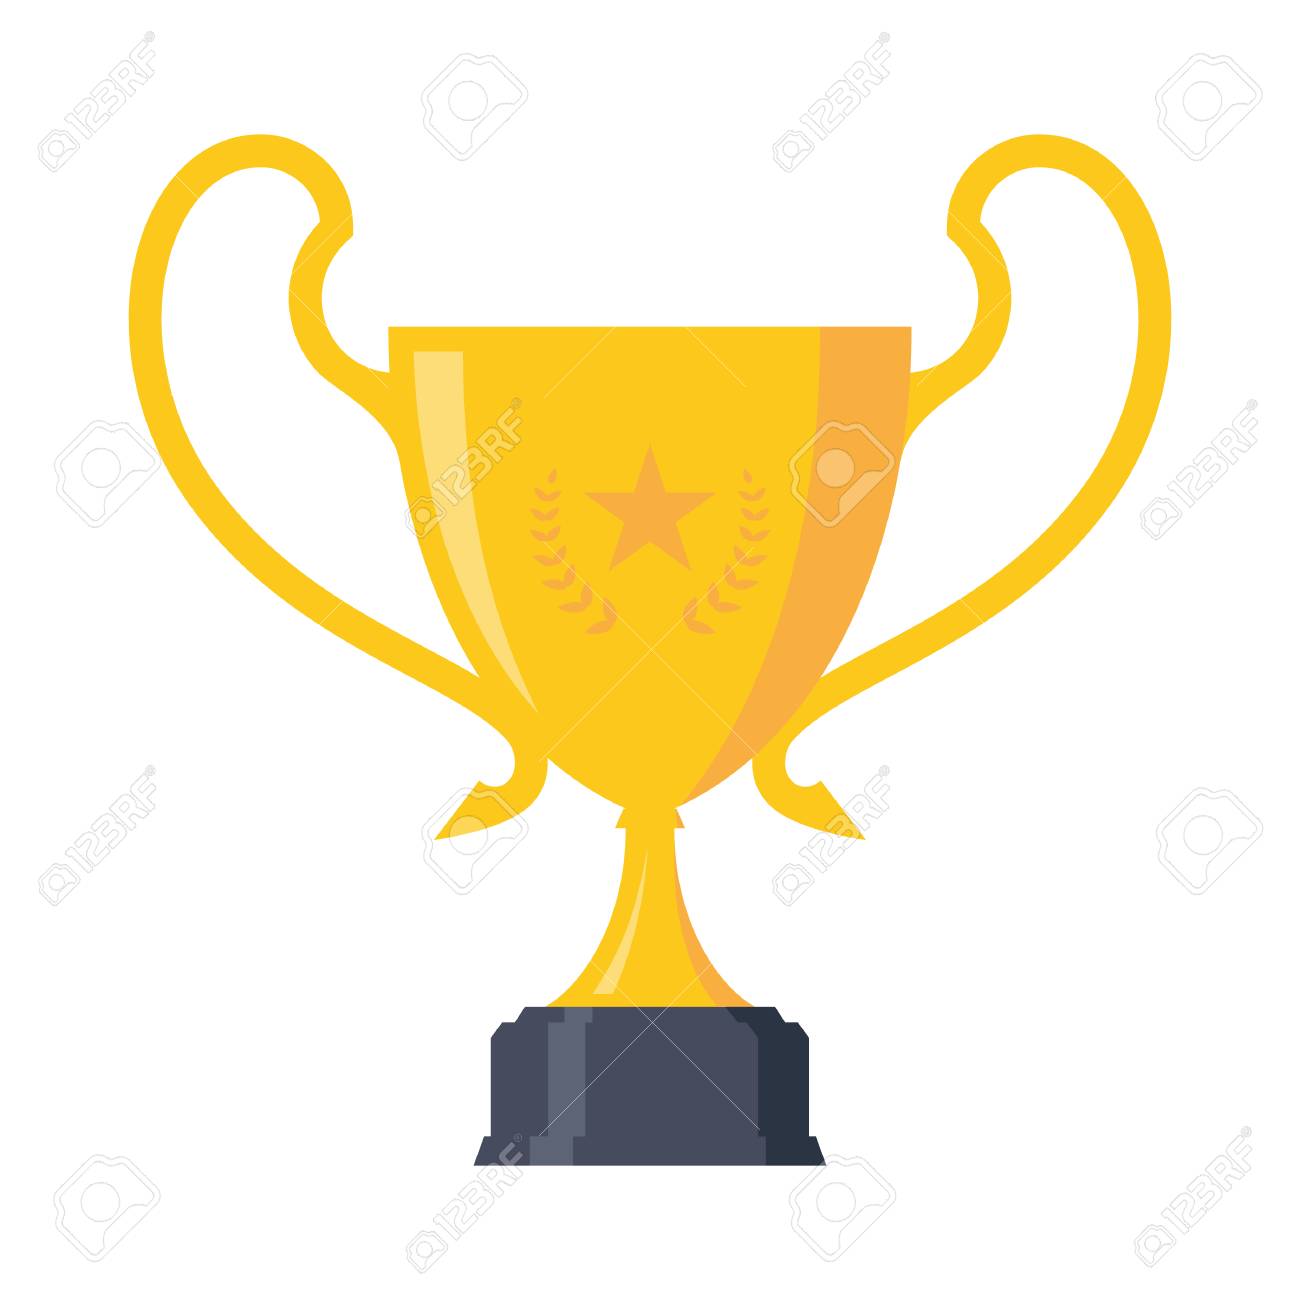 Free Trophy Clipart achievement, Download Free Clip Art on